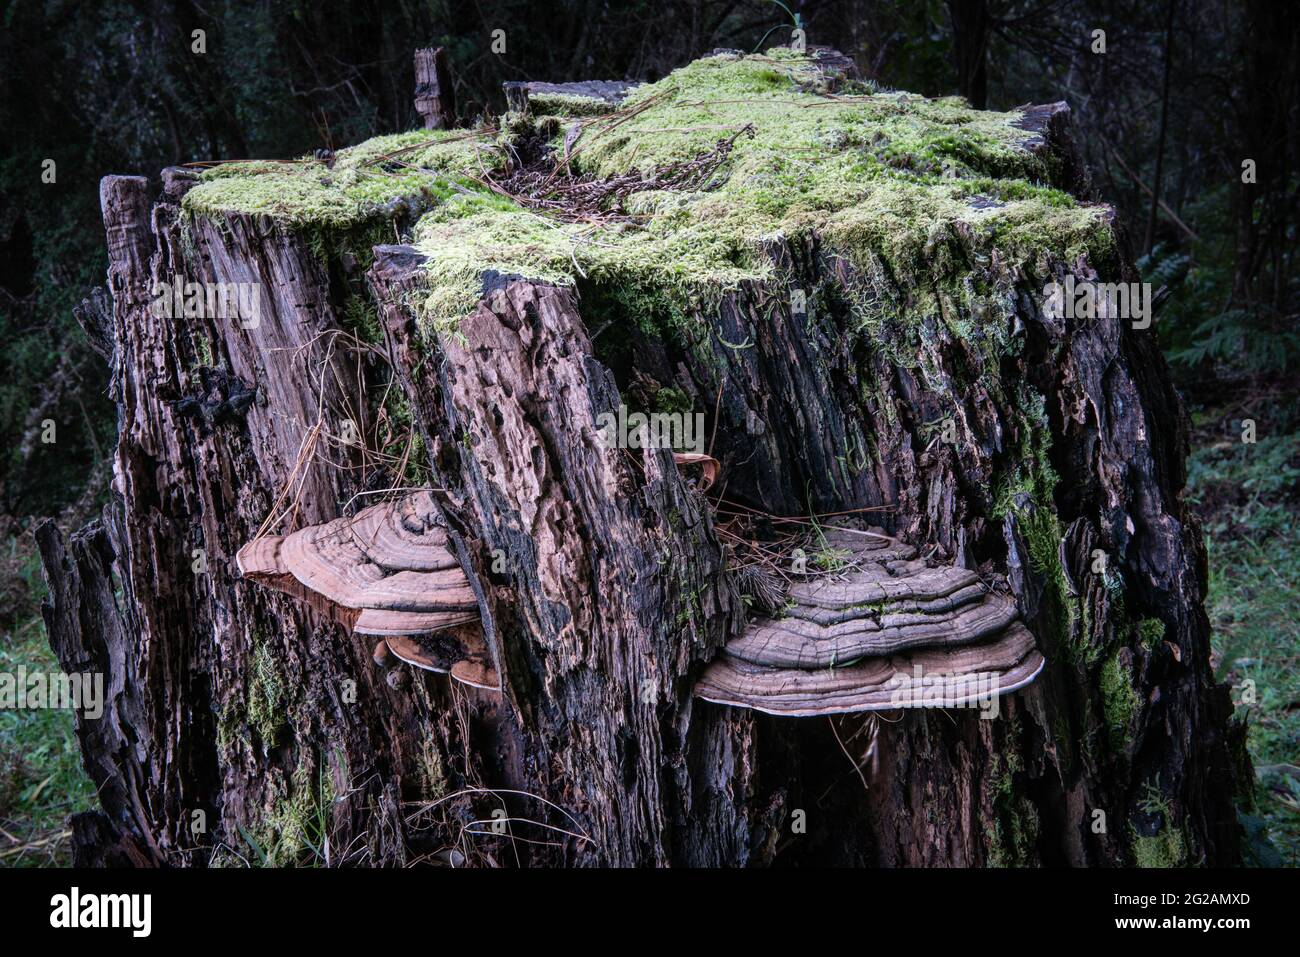 Fungus on tree stump, Warburton, Victoria, Australia Stock Photo